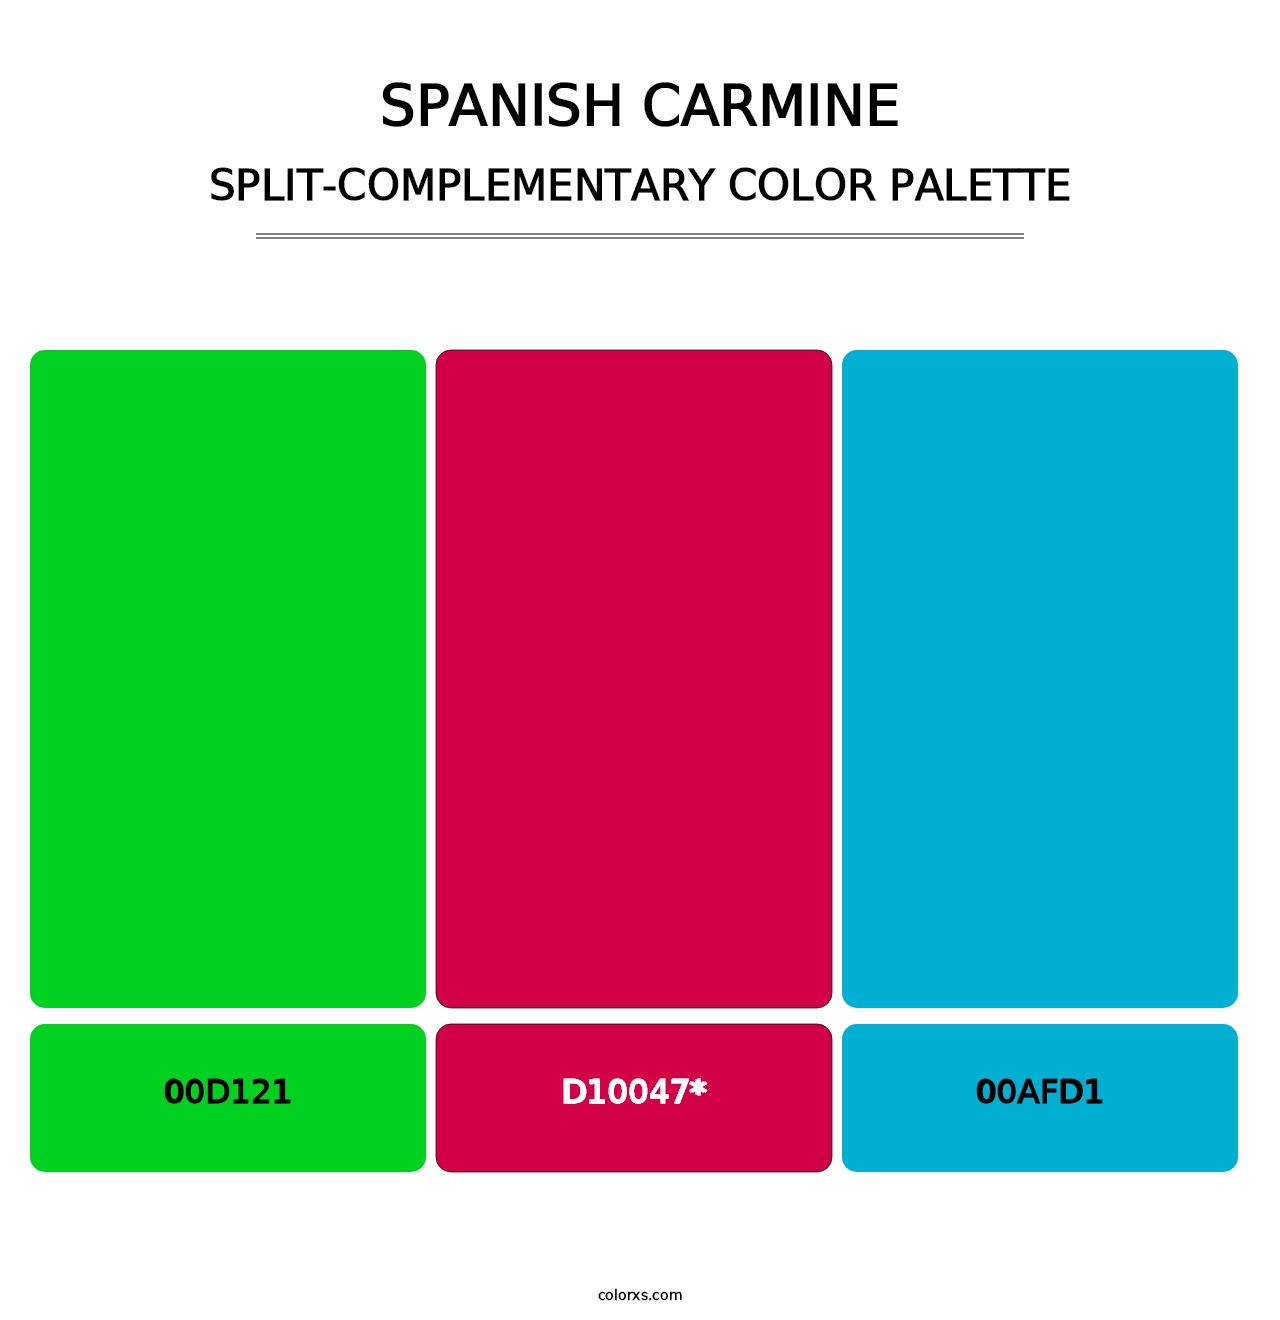 Spanish Carmine - Split-Complementary Color Palette